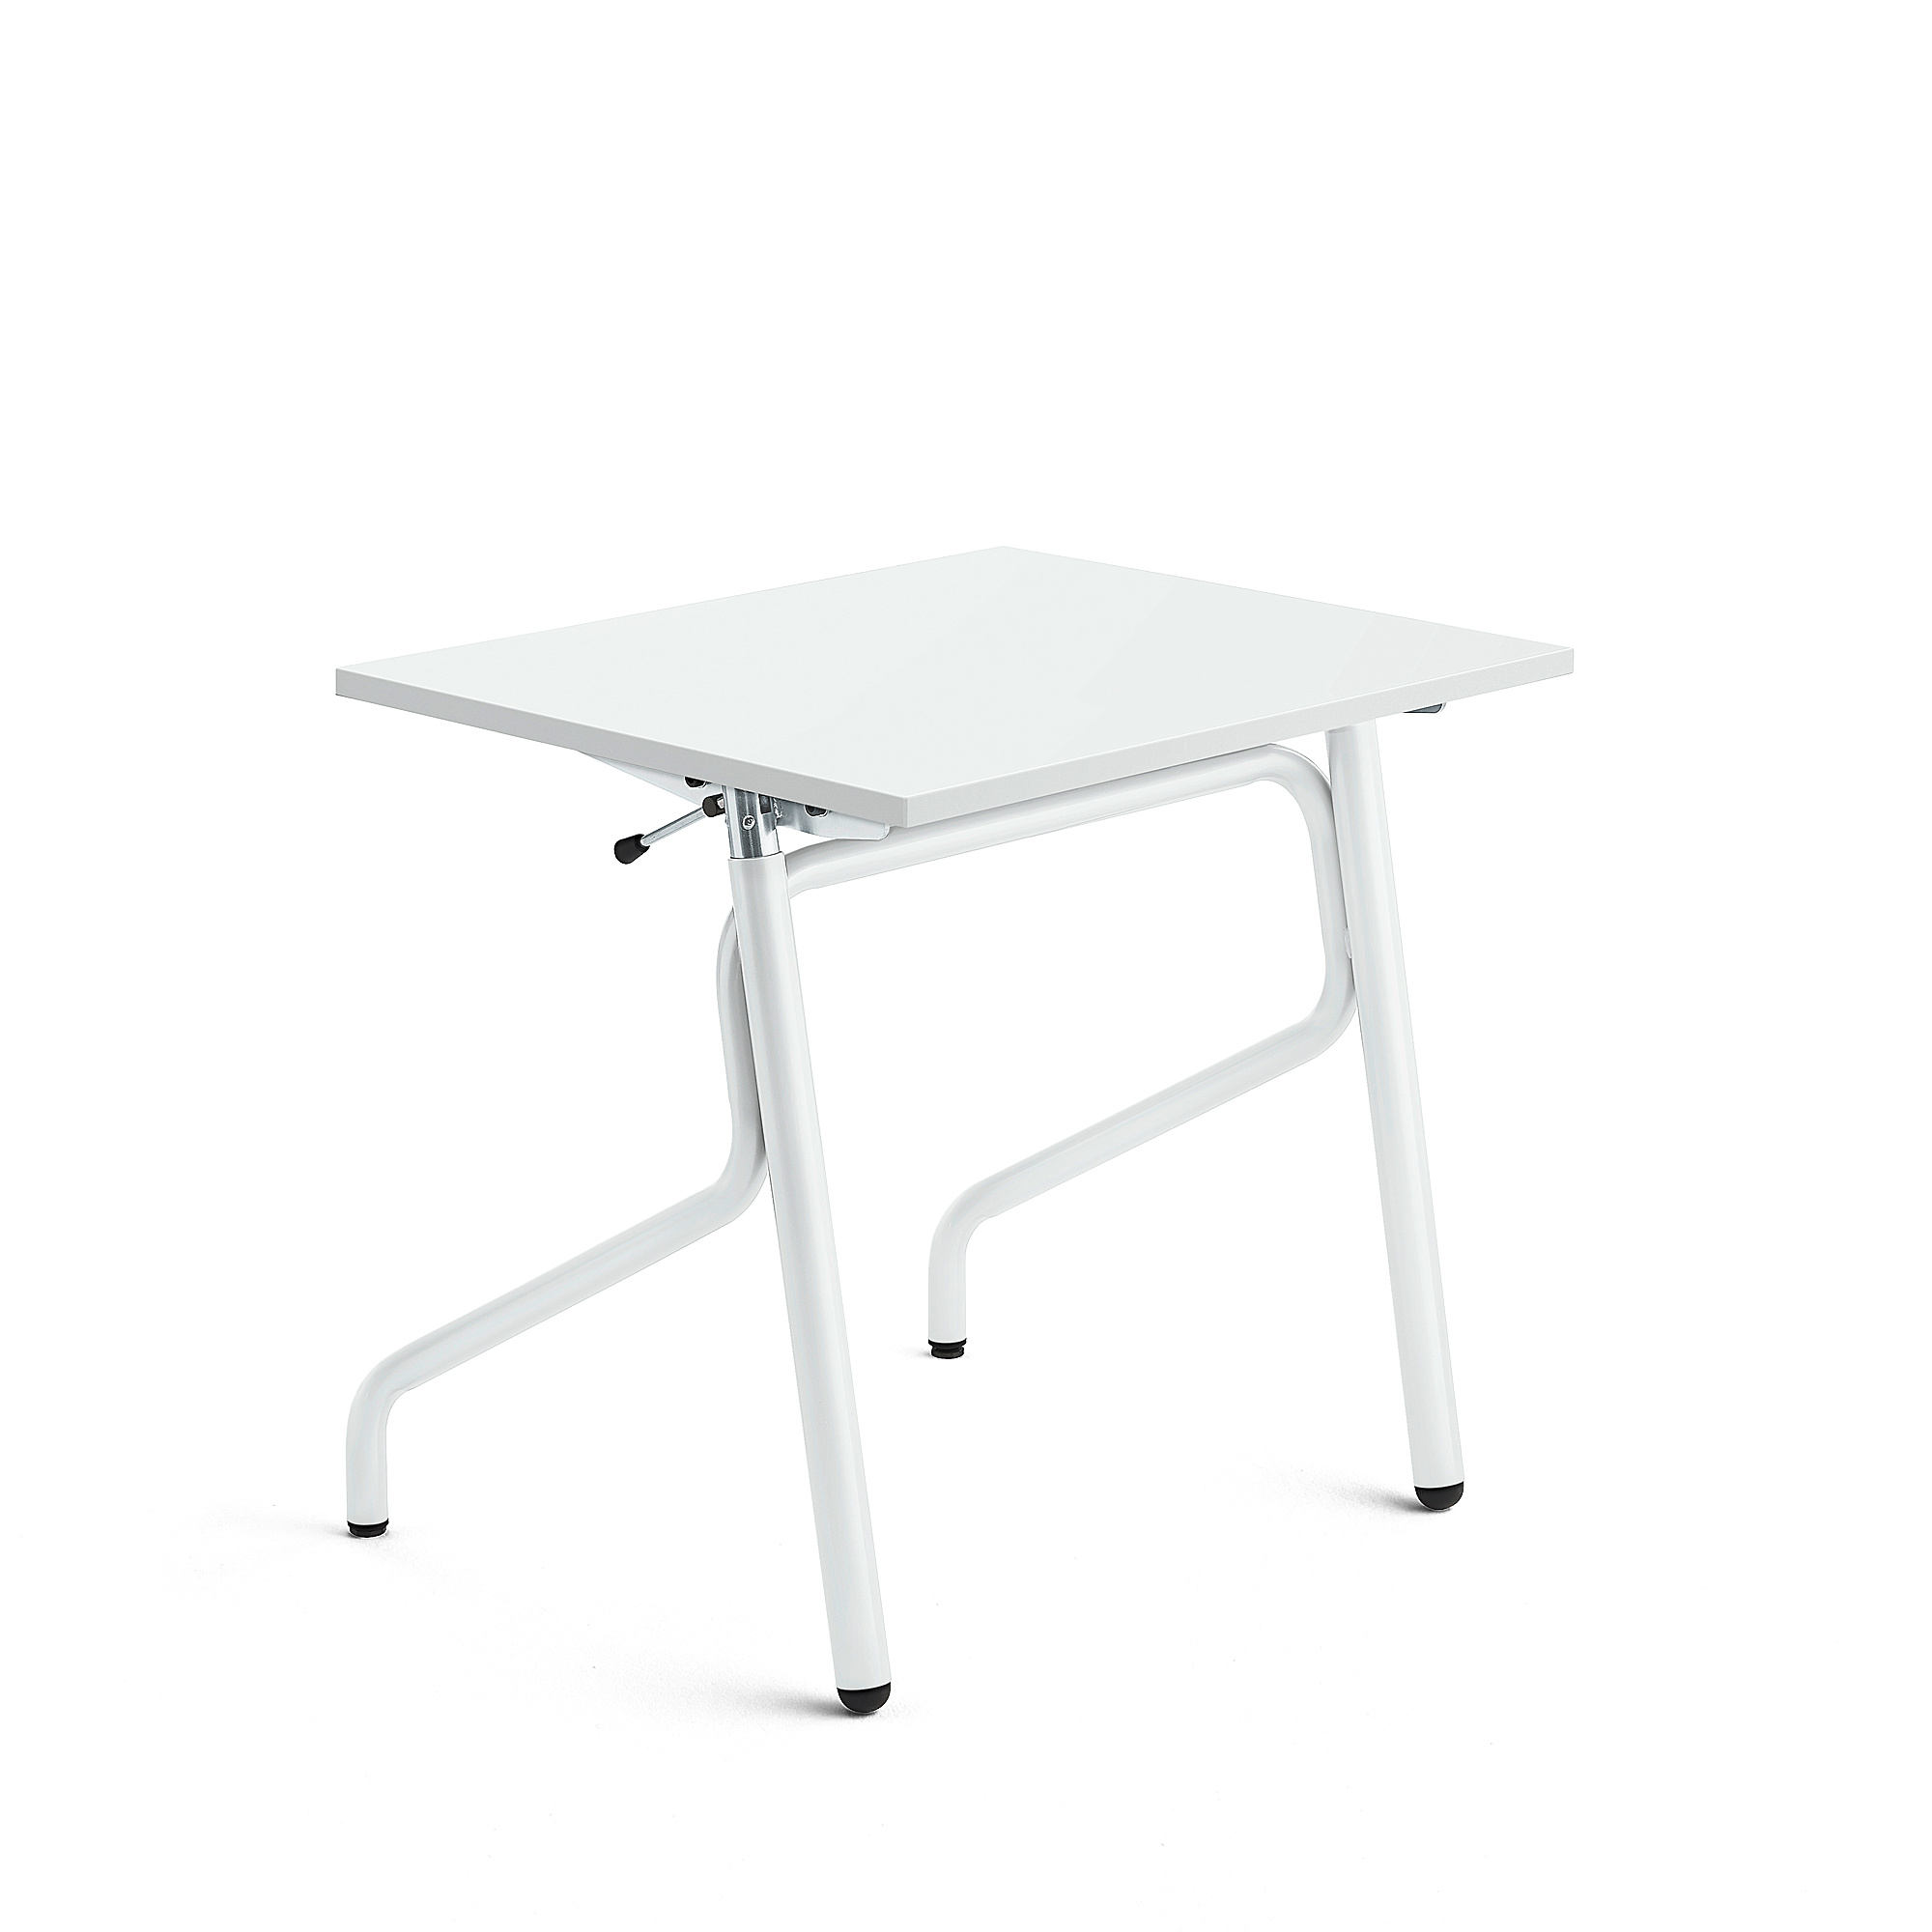 E-shop Nastaviteľná školská lavica ADJUST, 700x600 mm, akustický HPL - biela, biela